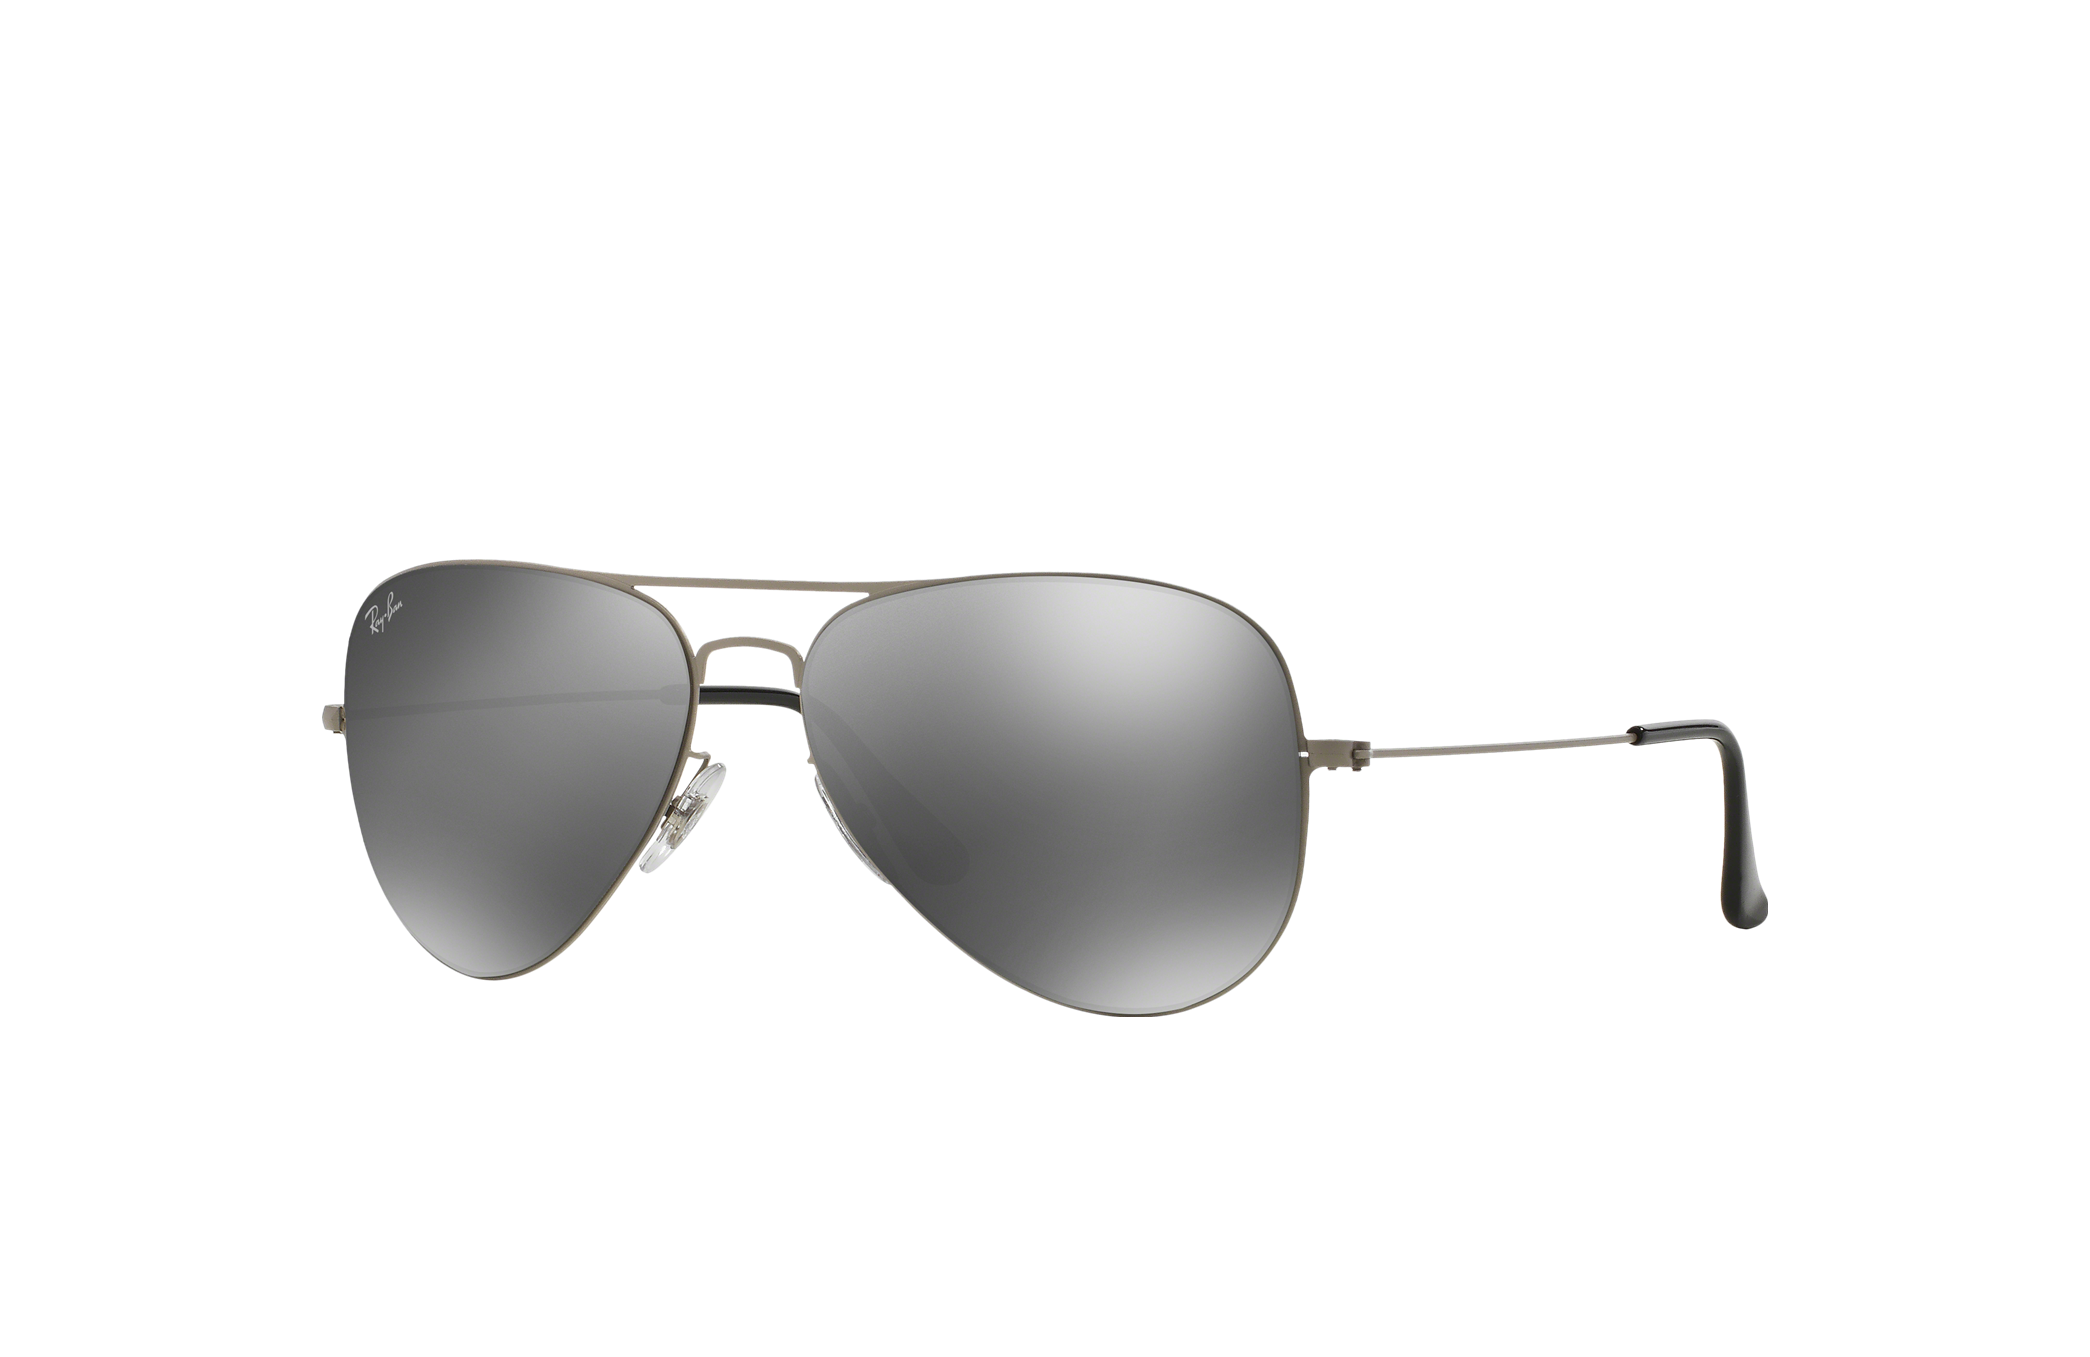 Ingrijpen bijtend zonsondergang Aviator Flat Metal Sunglasses in Silver and Grey | Ray-Ban®